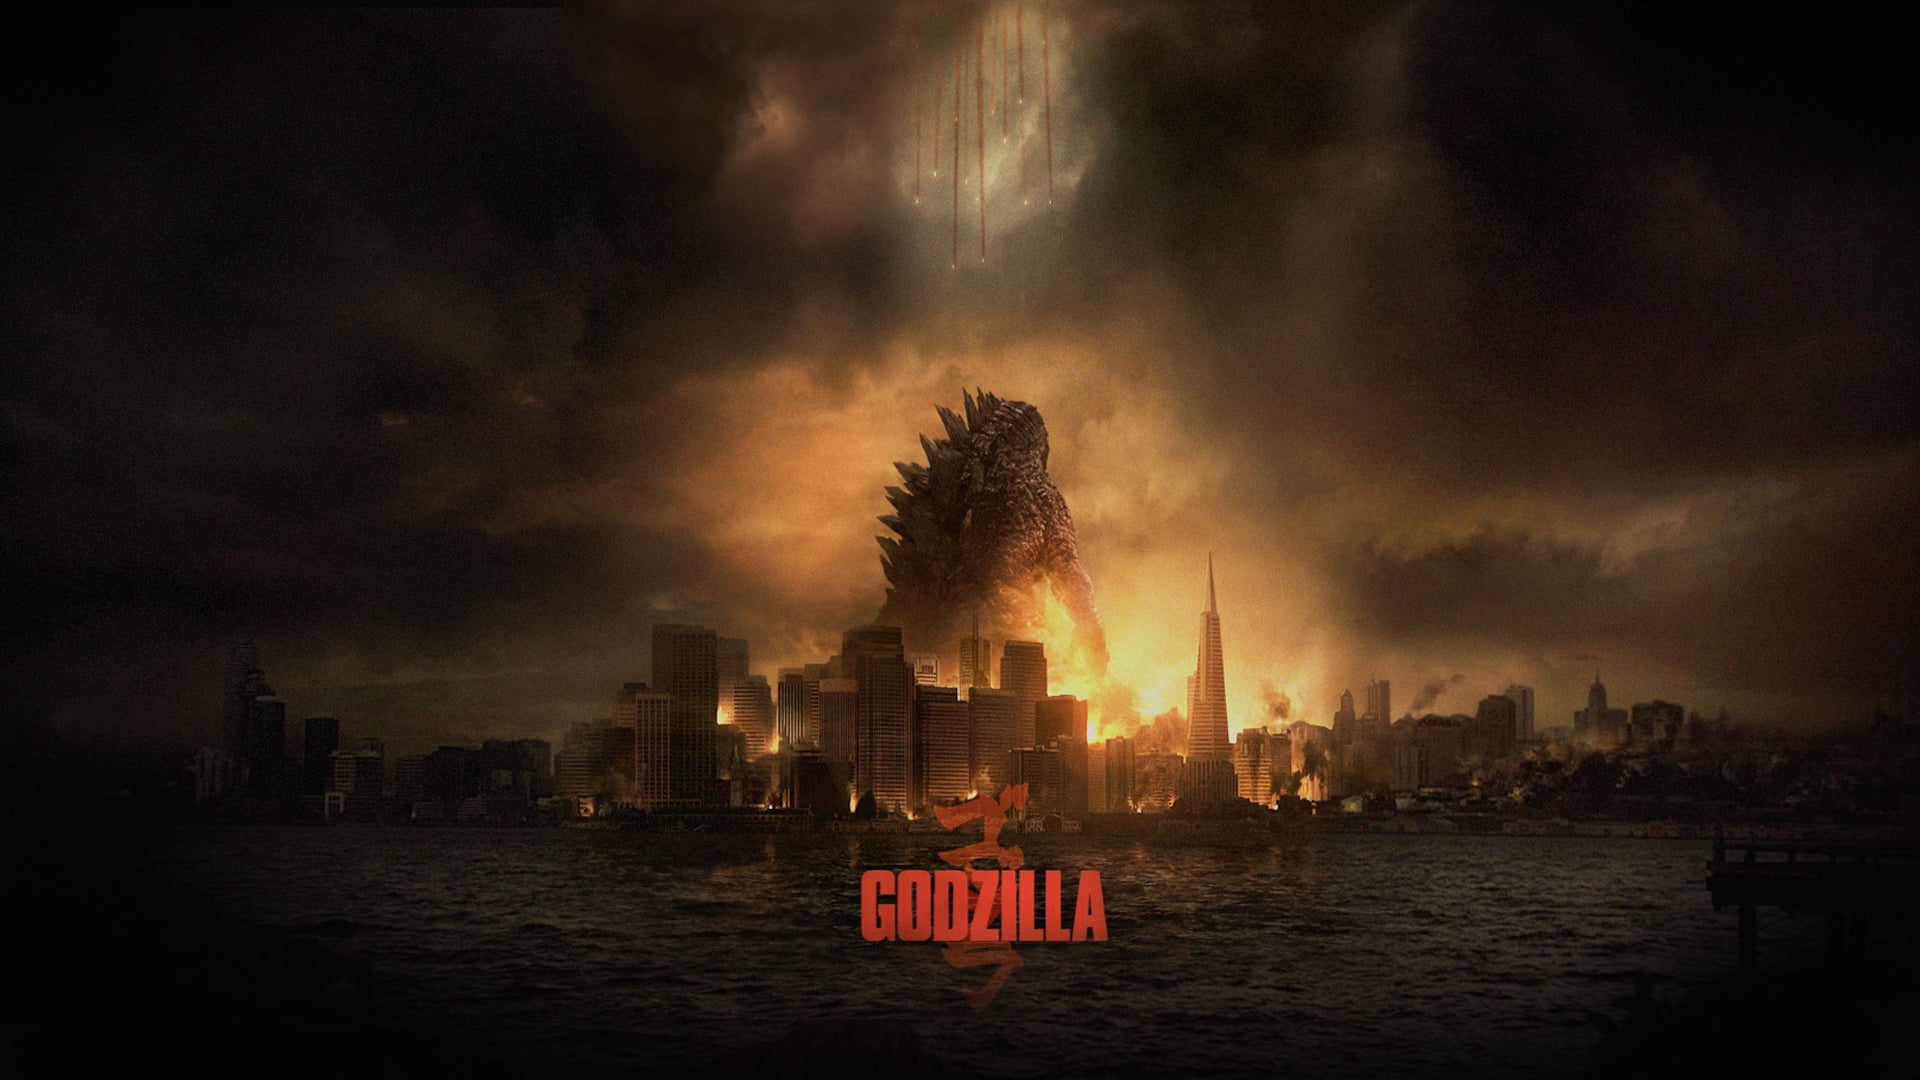 Godzilla digital wallpaper, movies, digital art, movie poster